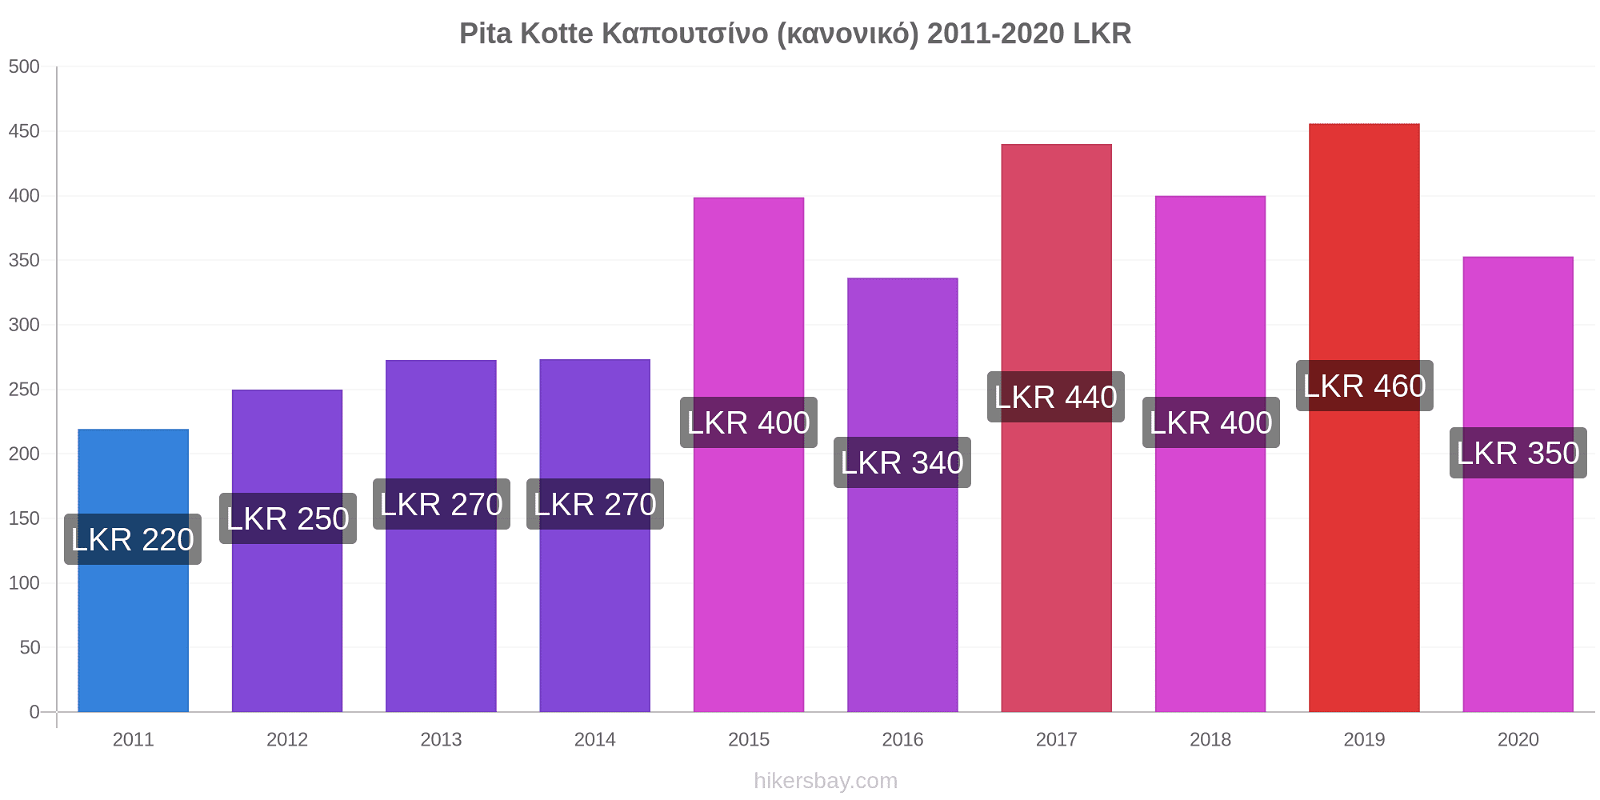 Pita Kotte αλλαγές τιμών Καπουτσίνο (κανονικό) hikersbay.com